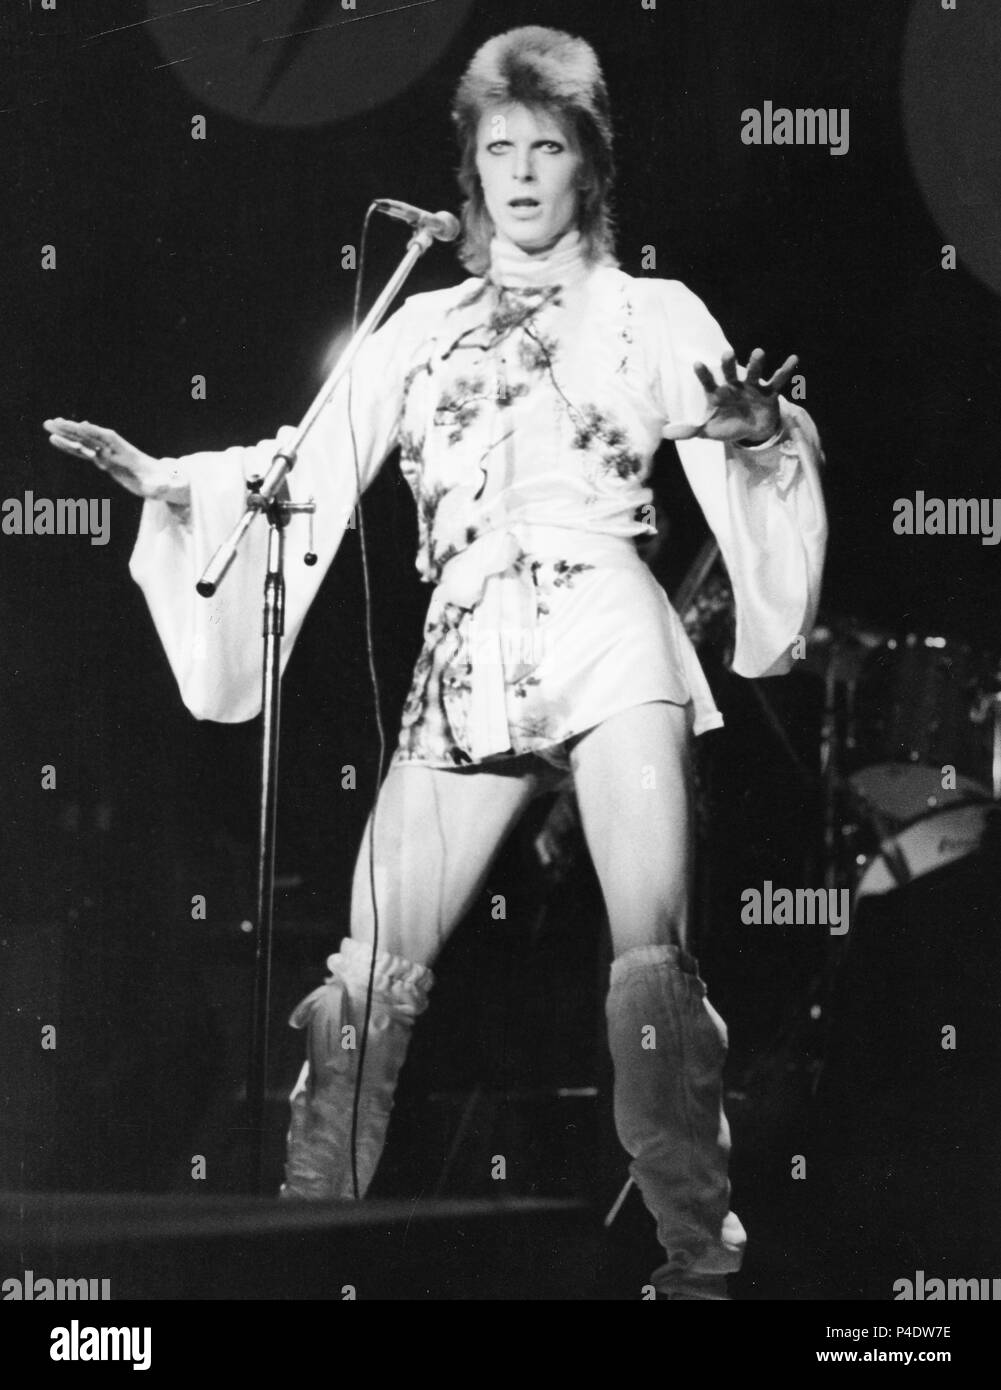 David Bowie, hammersmith odeon, Londra 1973 Foto Stock